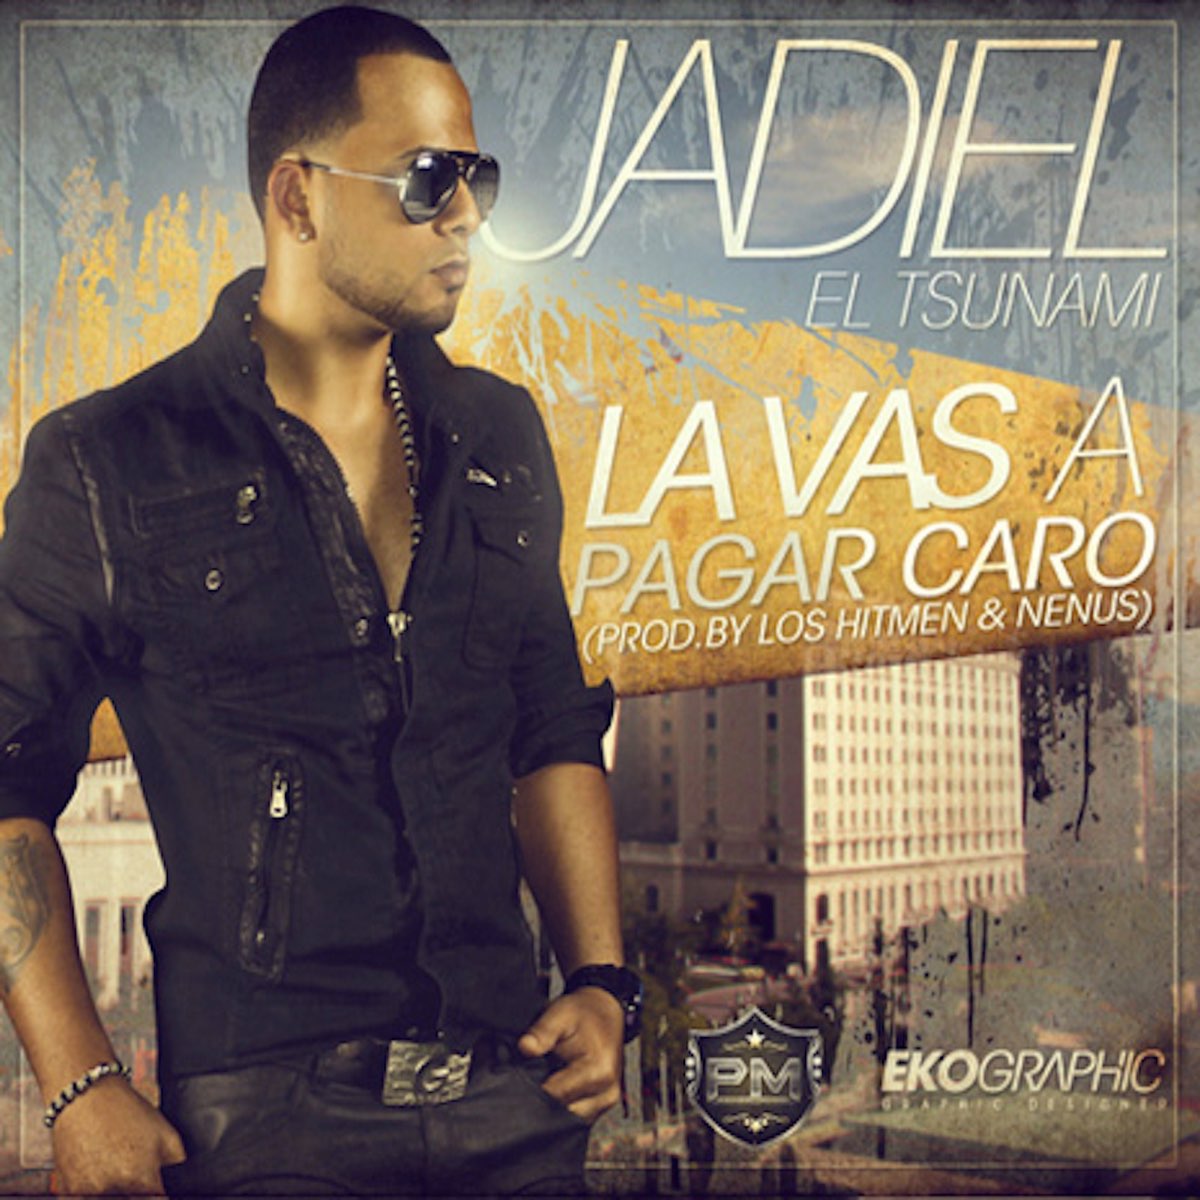 La Vas a Pagar Caro - Single de Jadiel en Apple Music